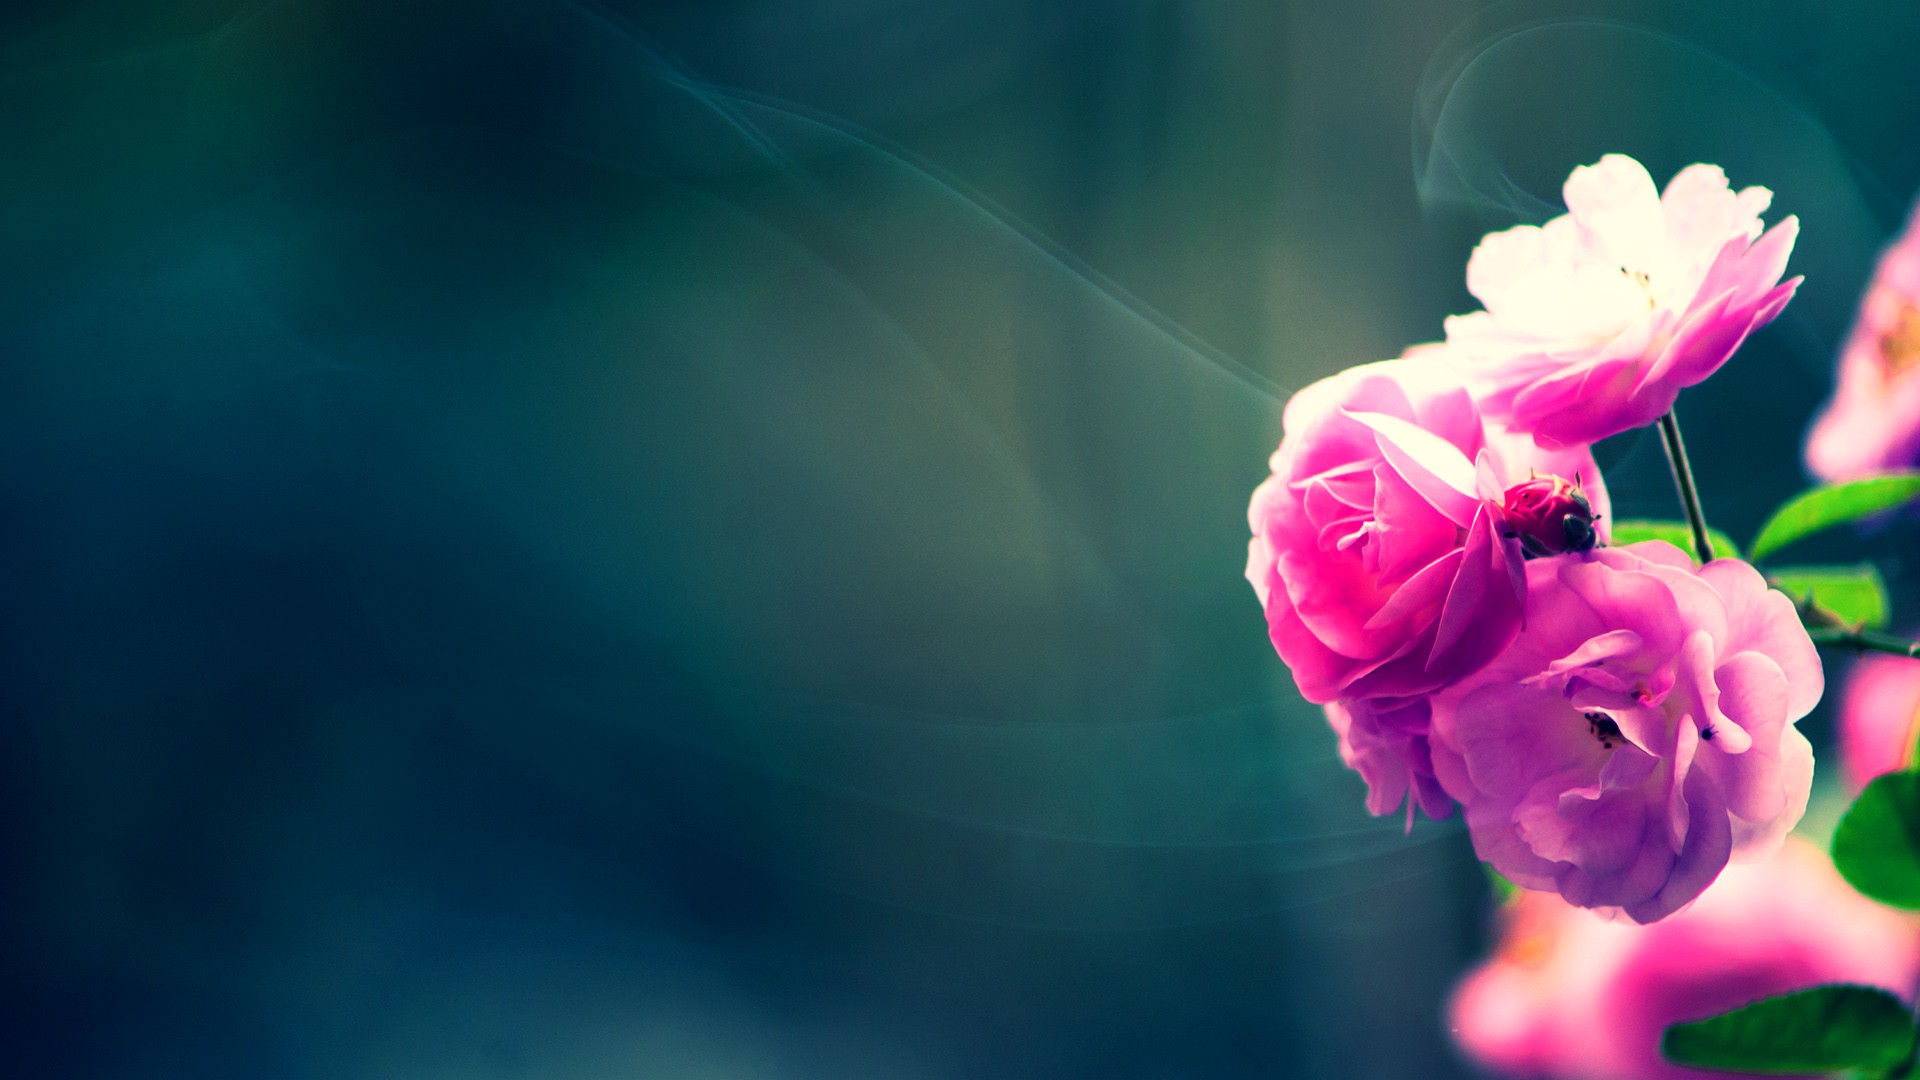 1000+ ideas about Hd Flower Wallpaper on Pinterest | Spring